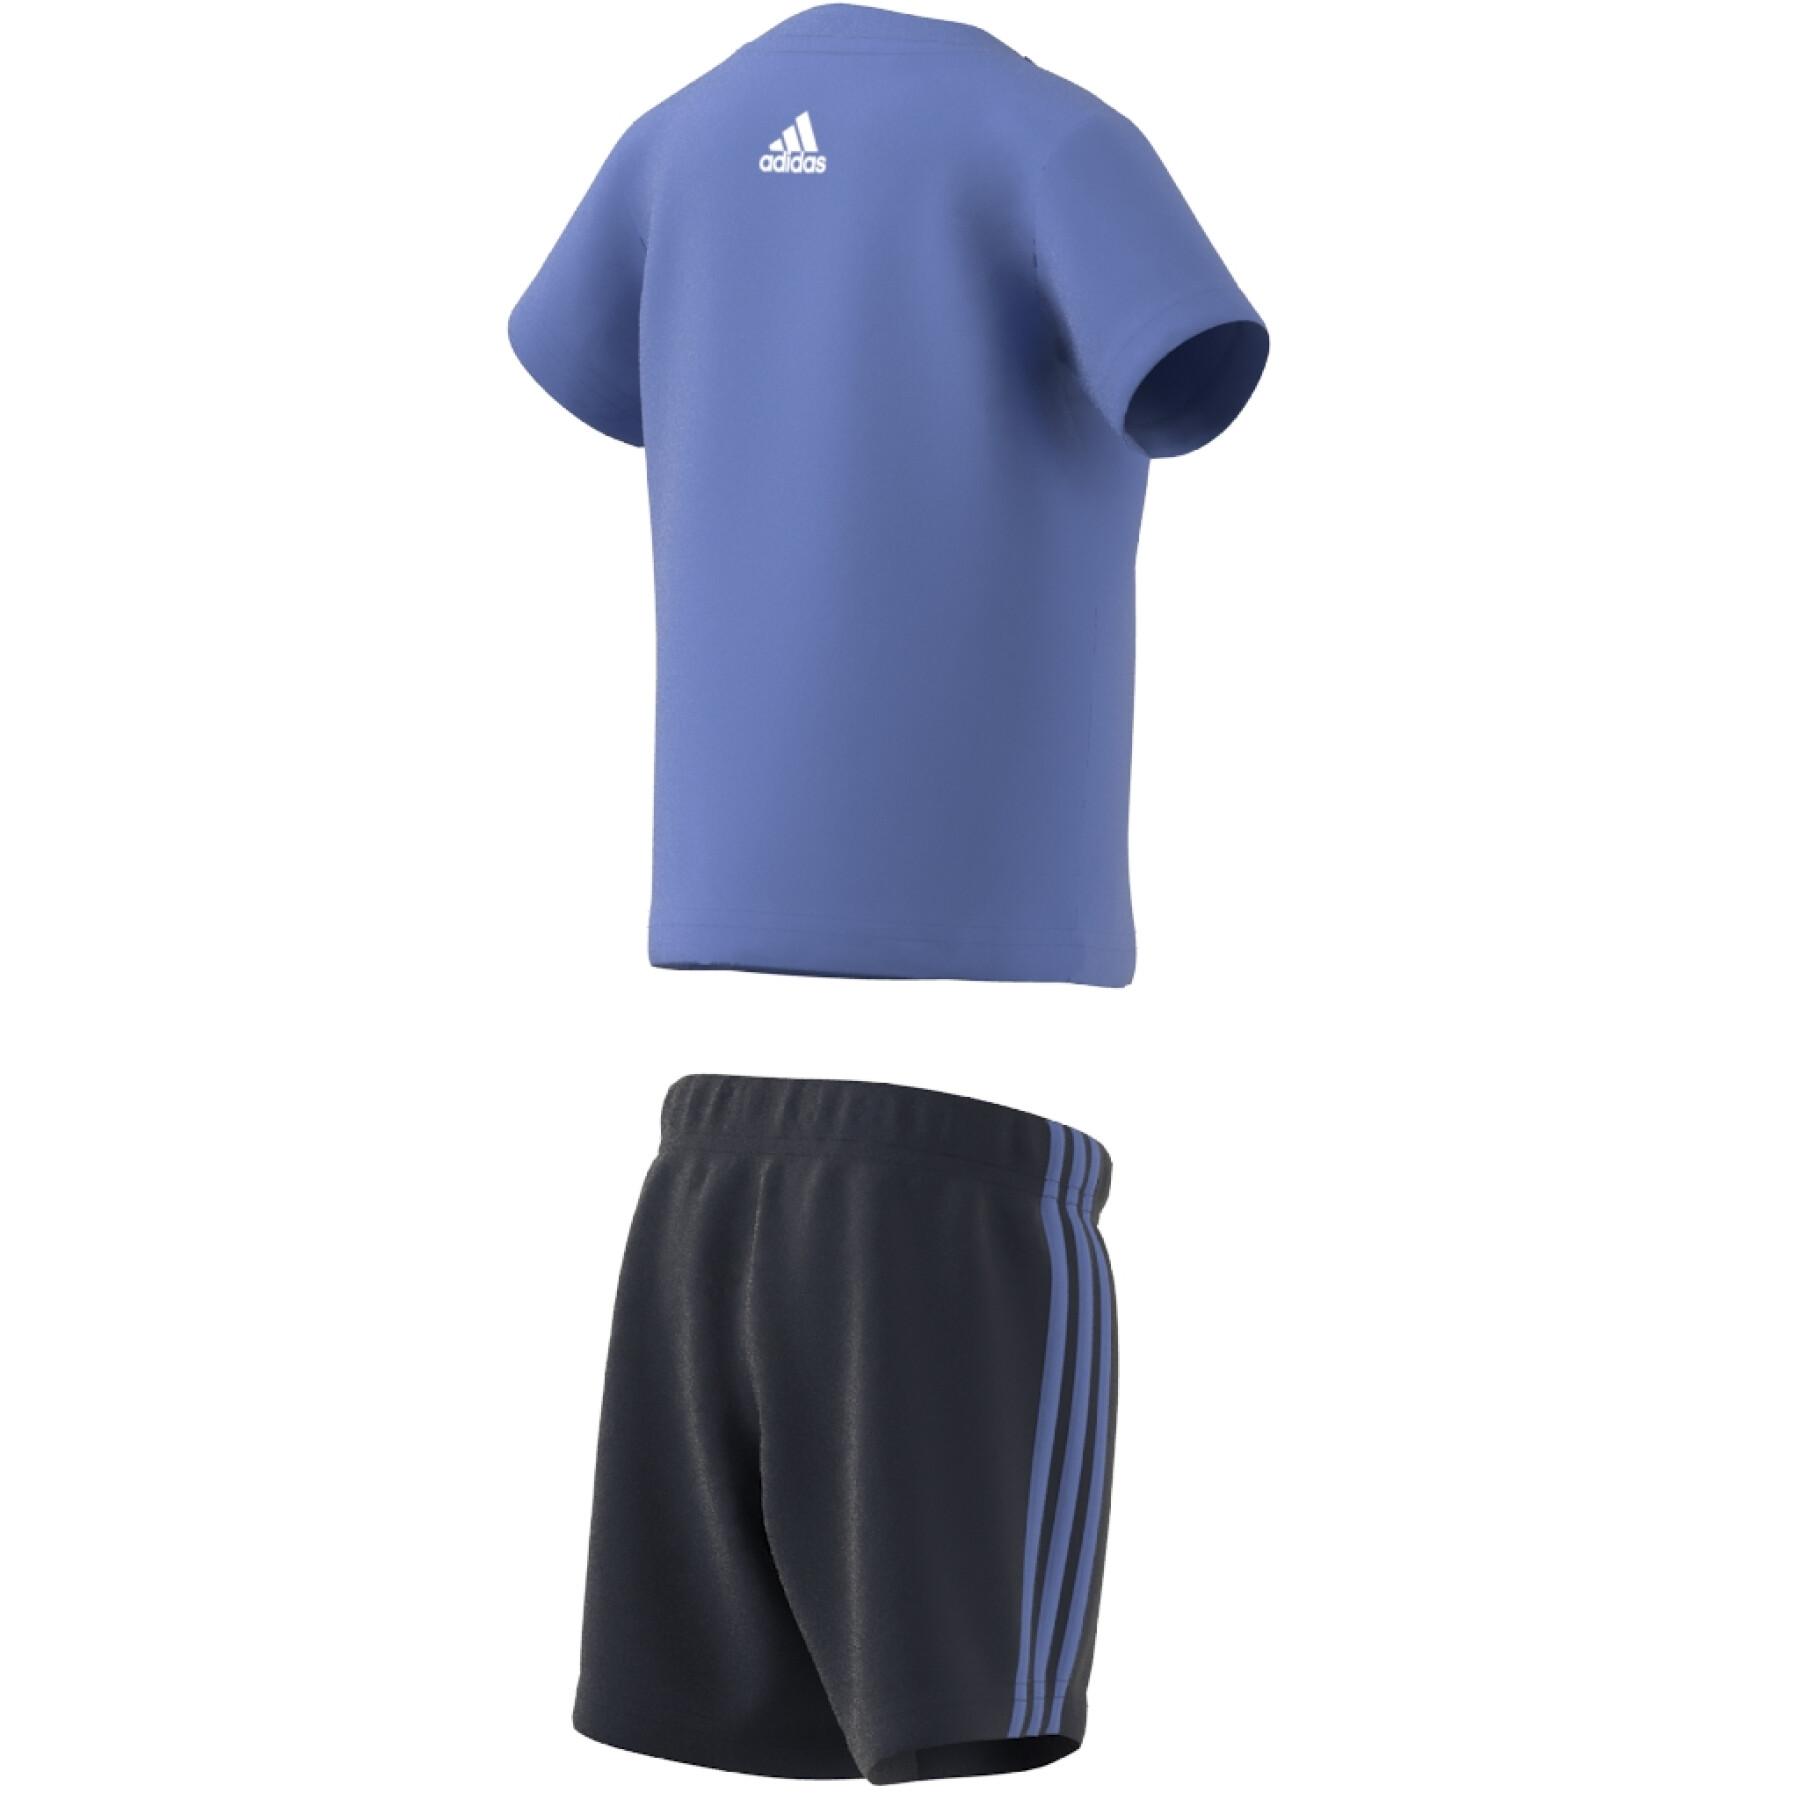 Set biologisch katoen t-shirt en shorts adidas 3-Stripes Essentials Lineage